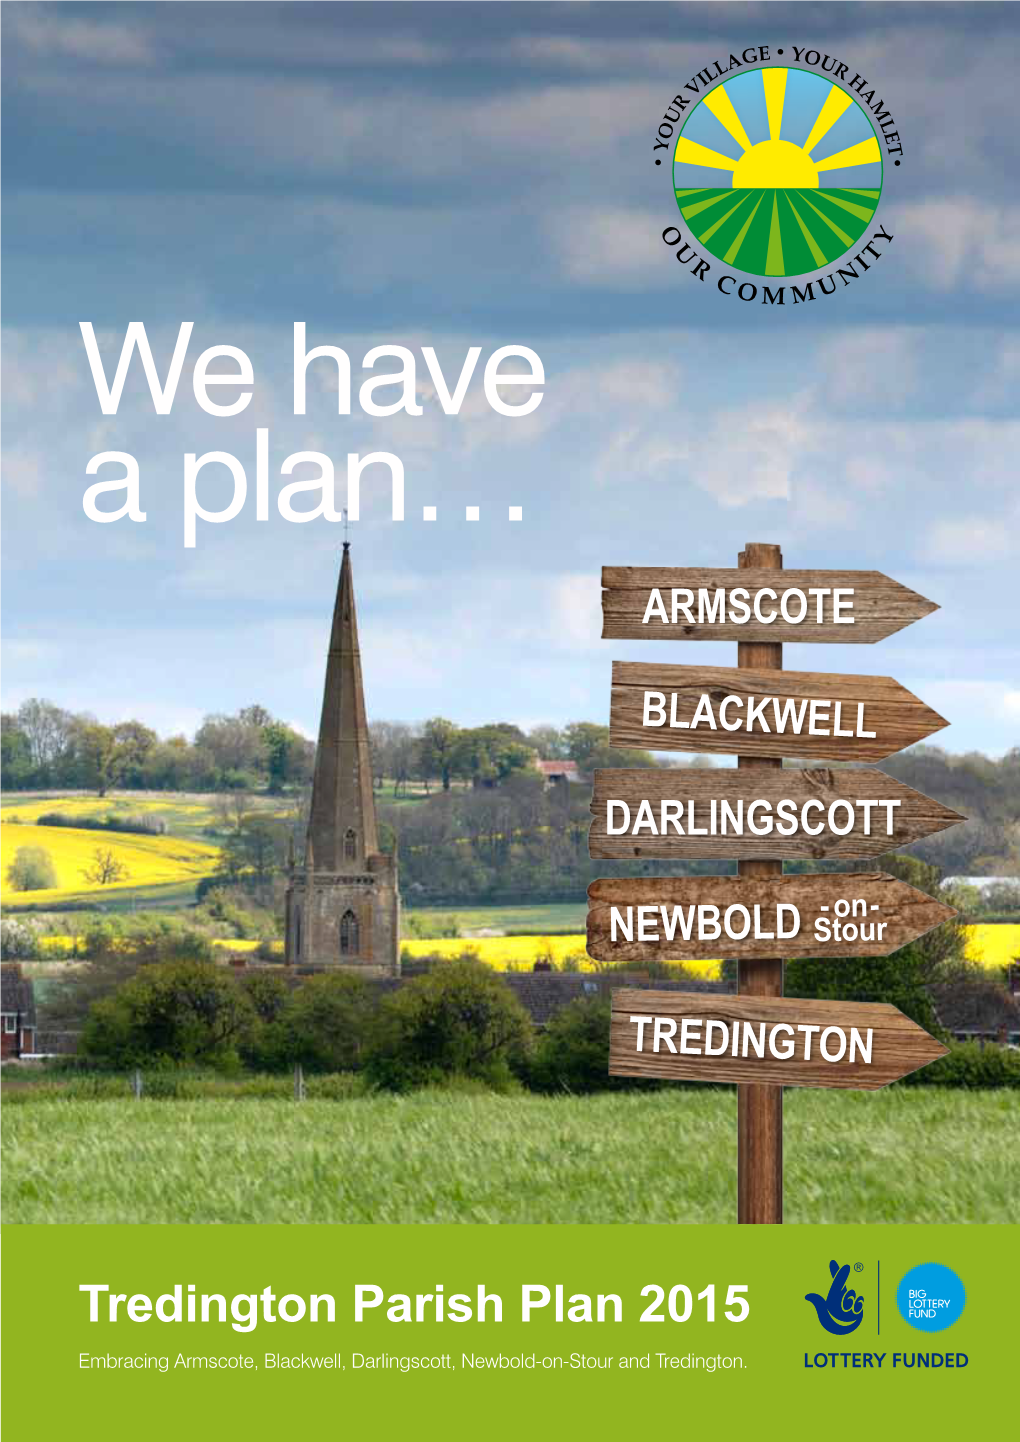 Tredington Parish Plan 2015 Embracing Armscote, Blackwell, Darlingscott, Newbold-On-Stour and Tredington